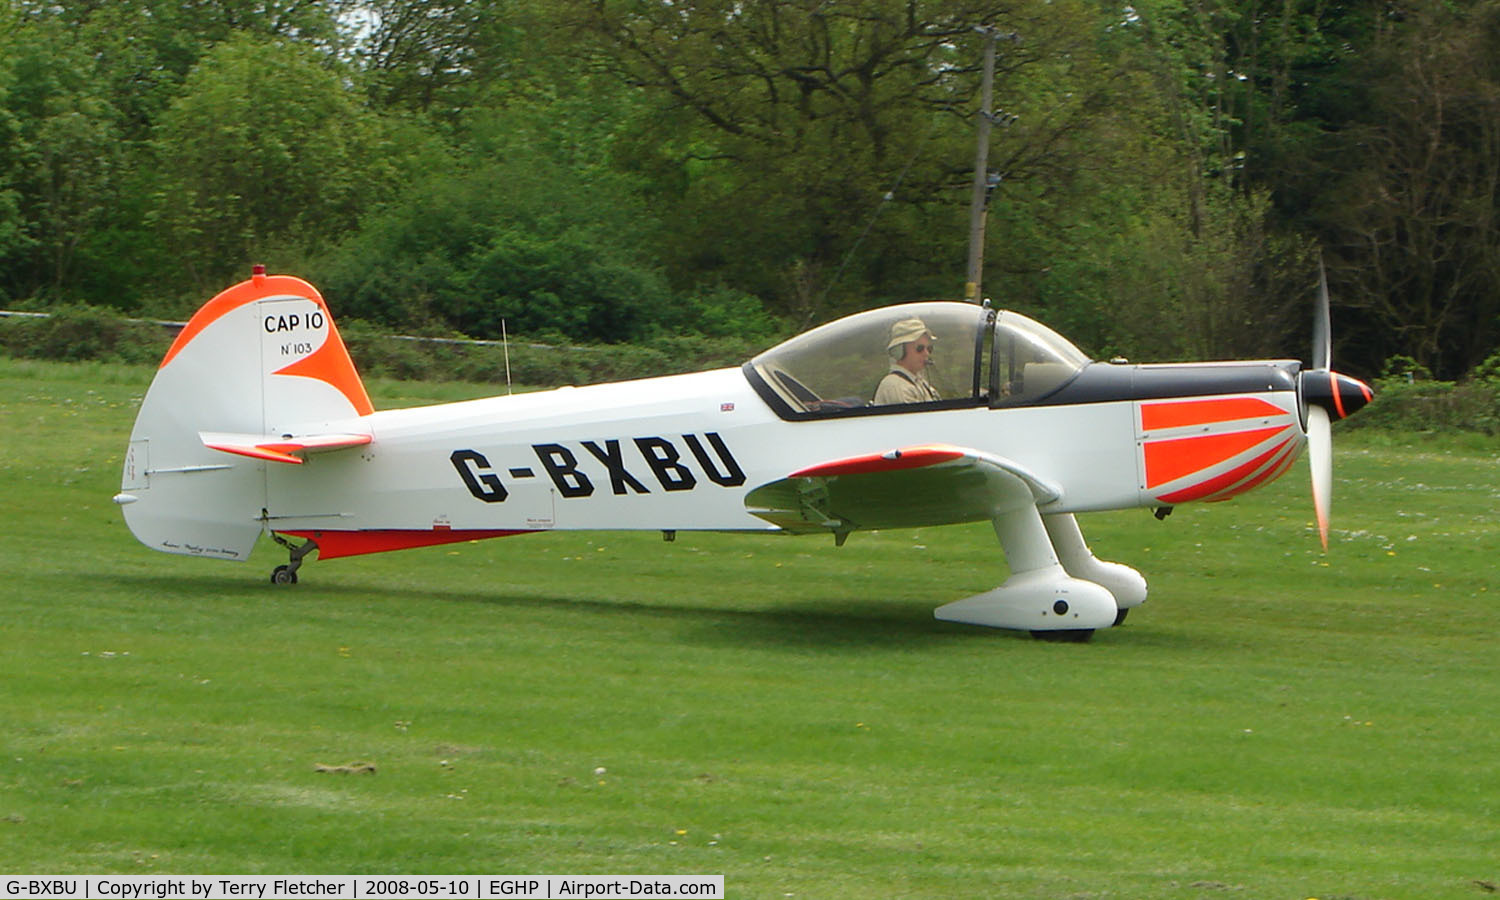 G-BXBU, 1980 Mudry CAP-10B C/N 103, A very pleasant general Aviation day at Popham in rural UK